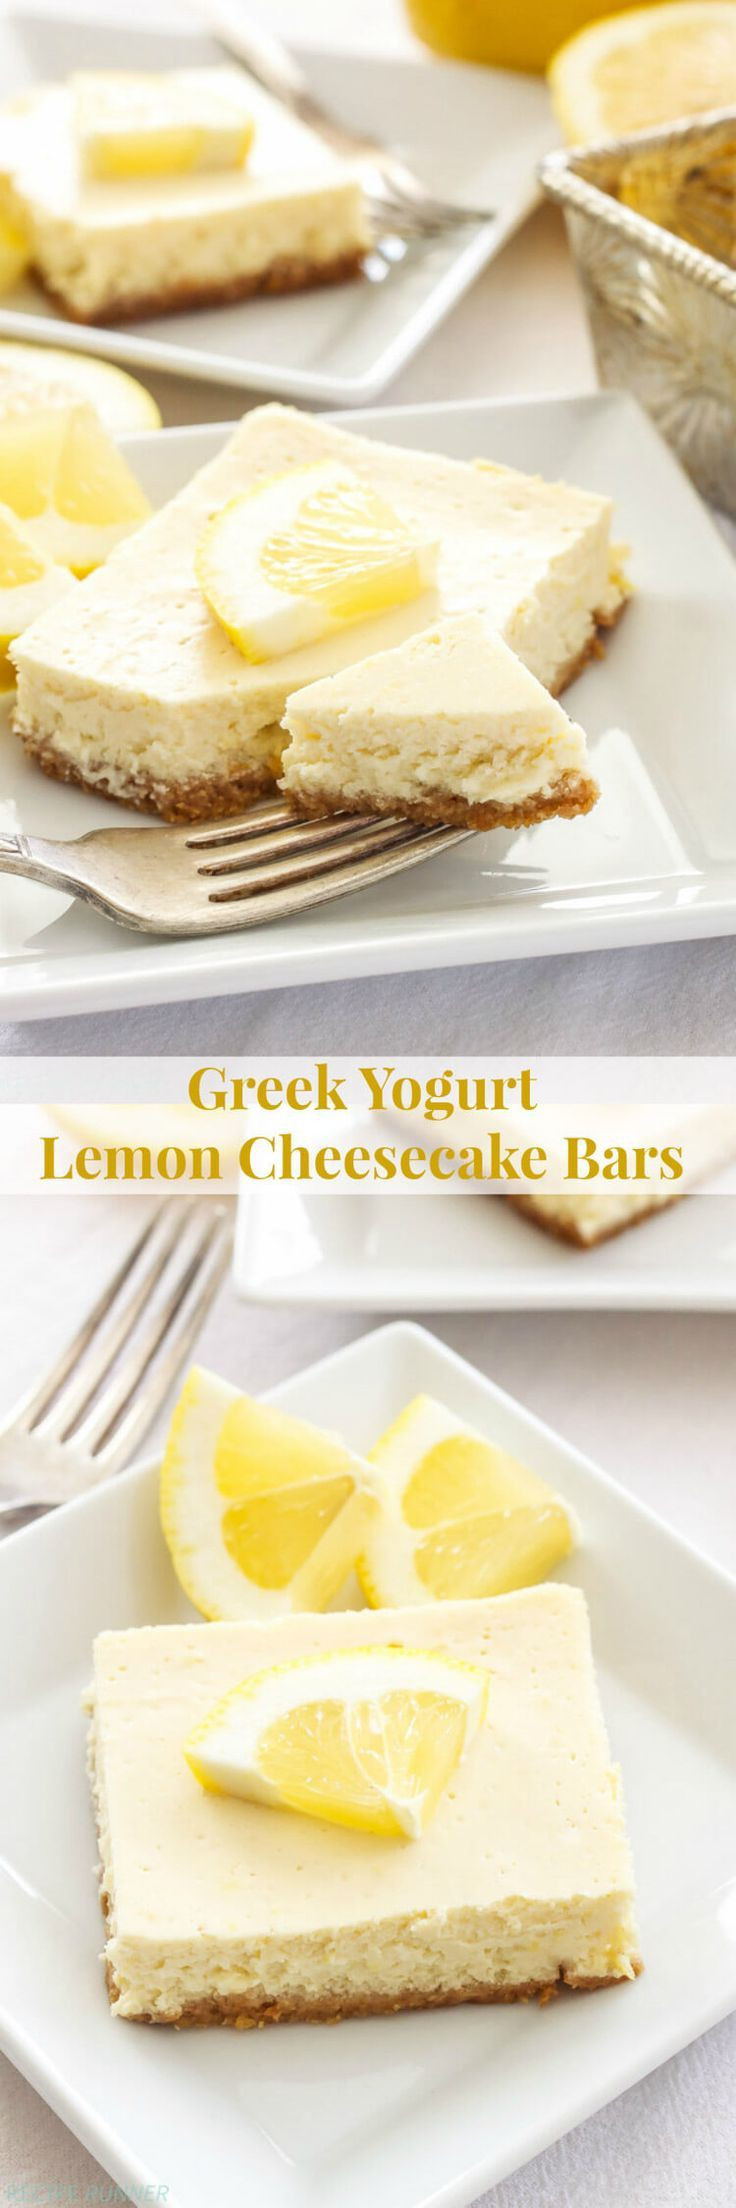 Healthy Lemon Desserts
 273 best images about Lemon desserts on Pinterest